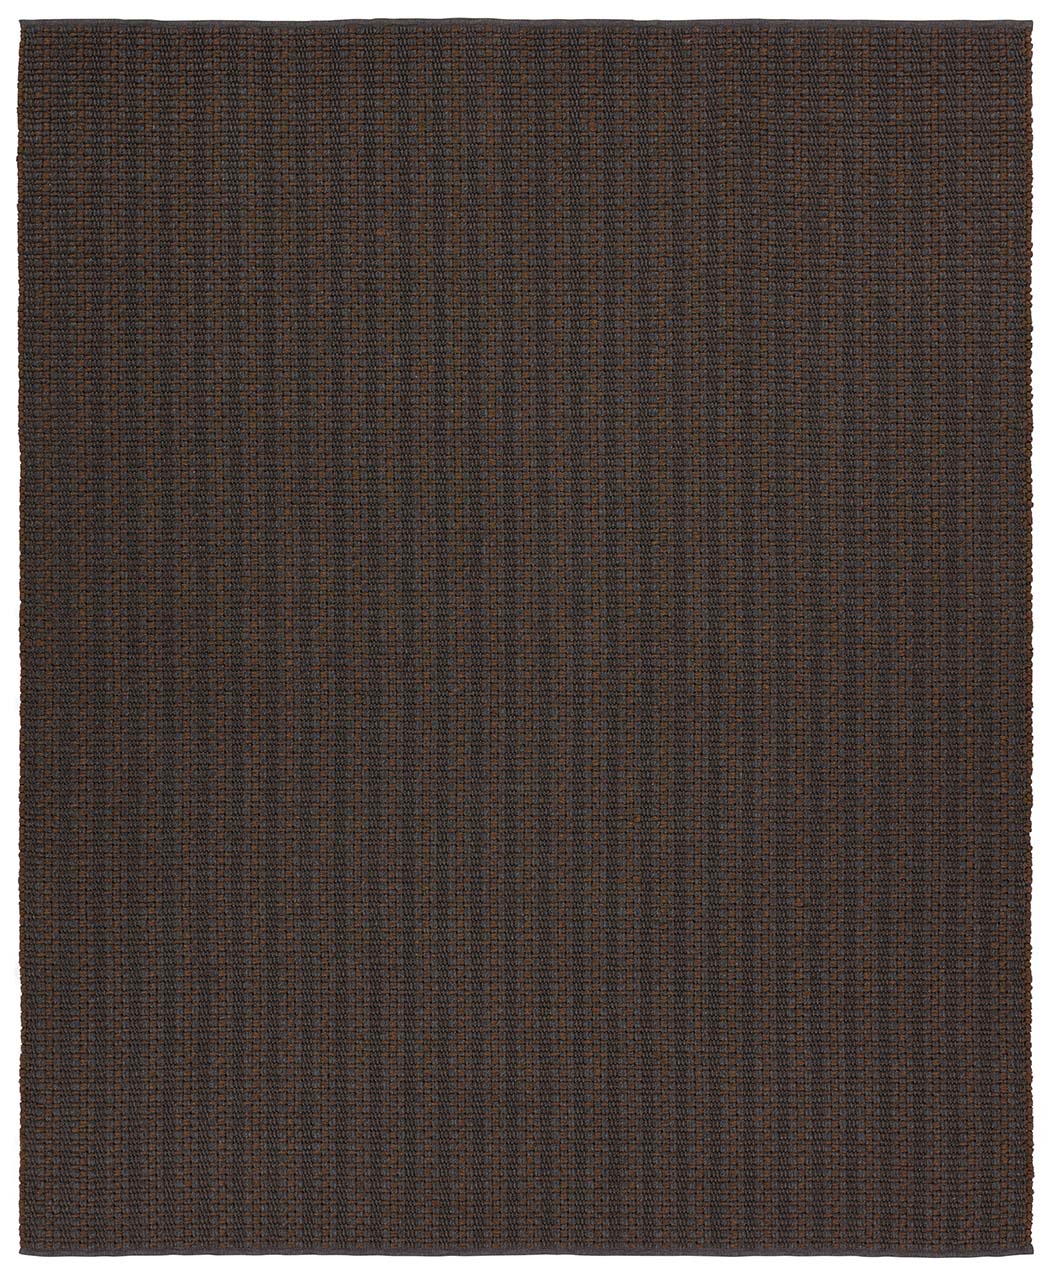 Jaipur Living Elmas Handmade Indoor/Outdoor Striped Gray/Brown Area Rug  Product Image